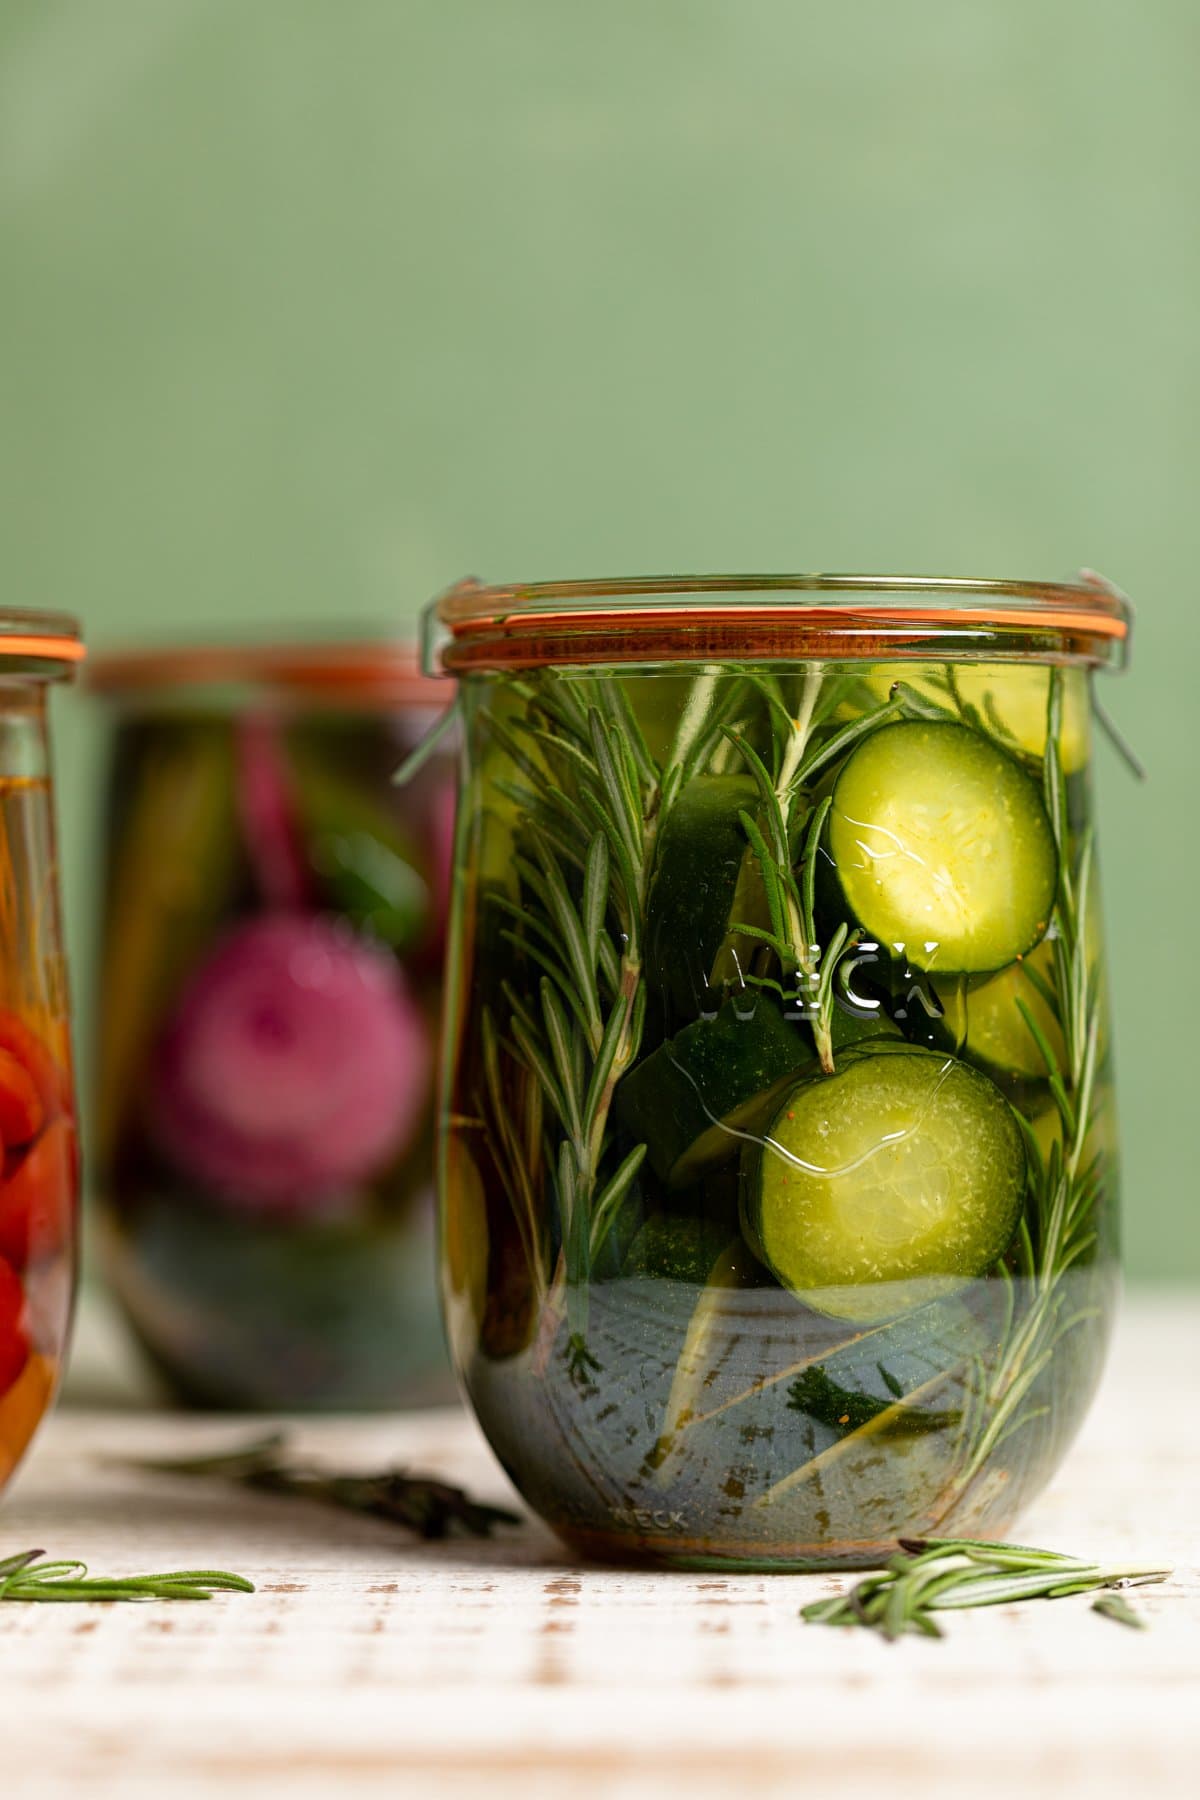 Closeup of a jar of quick pickled green vegetables